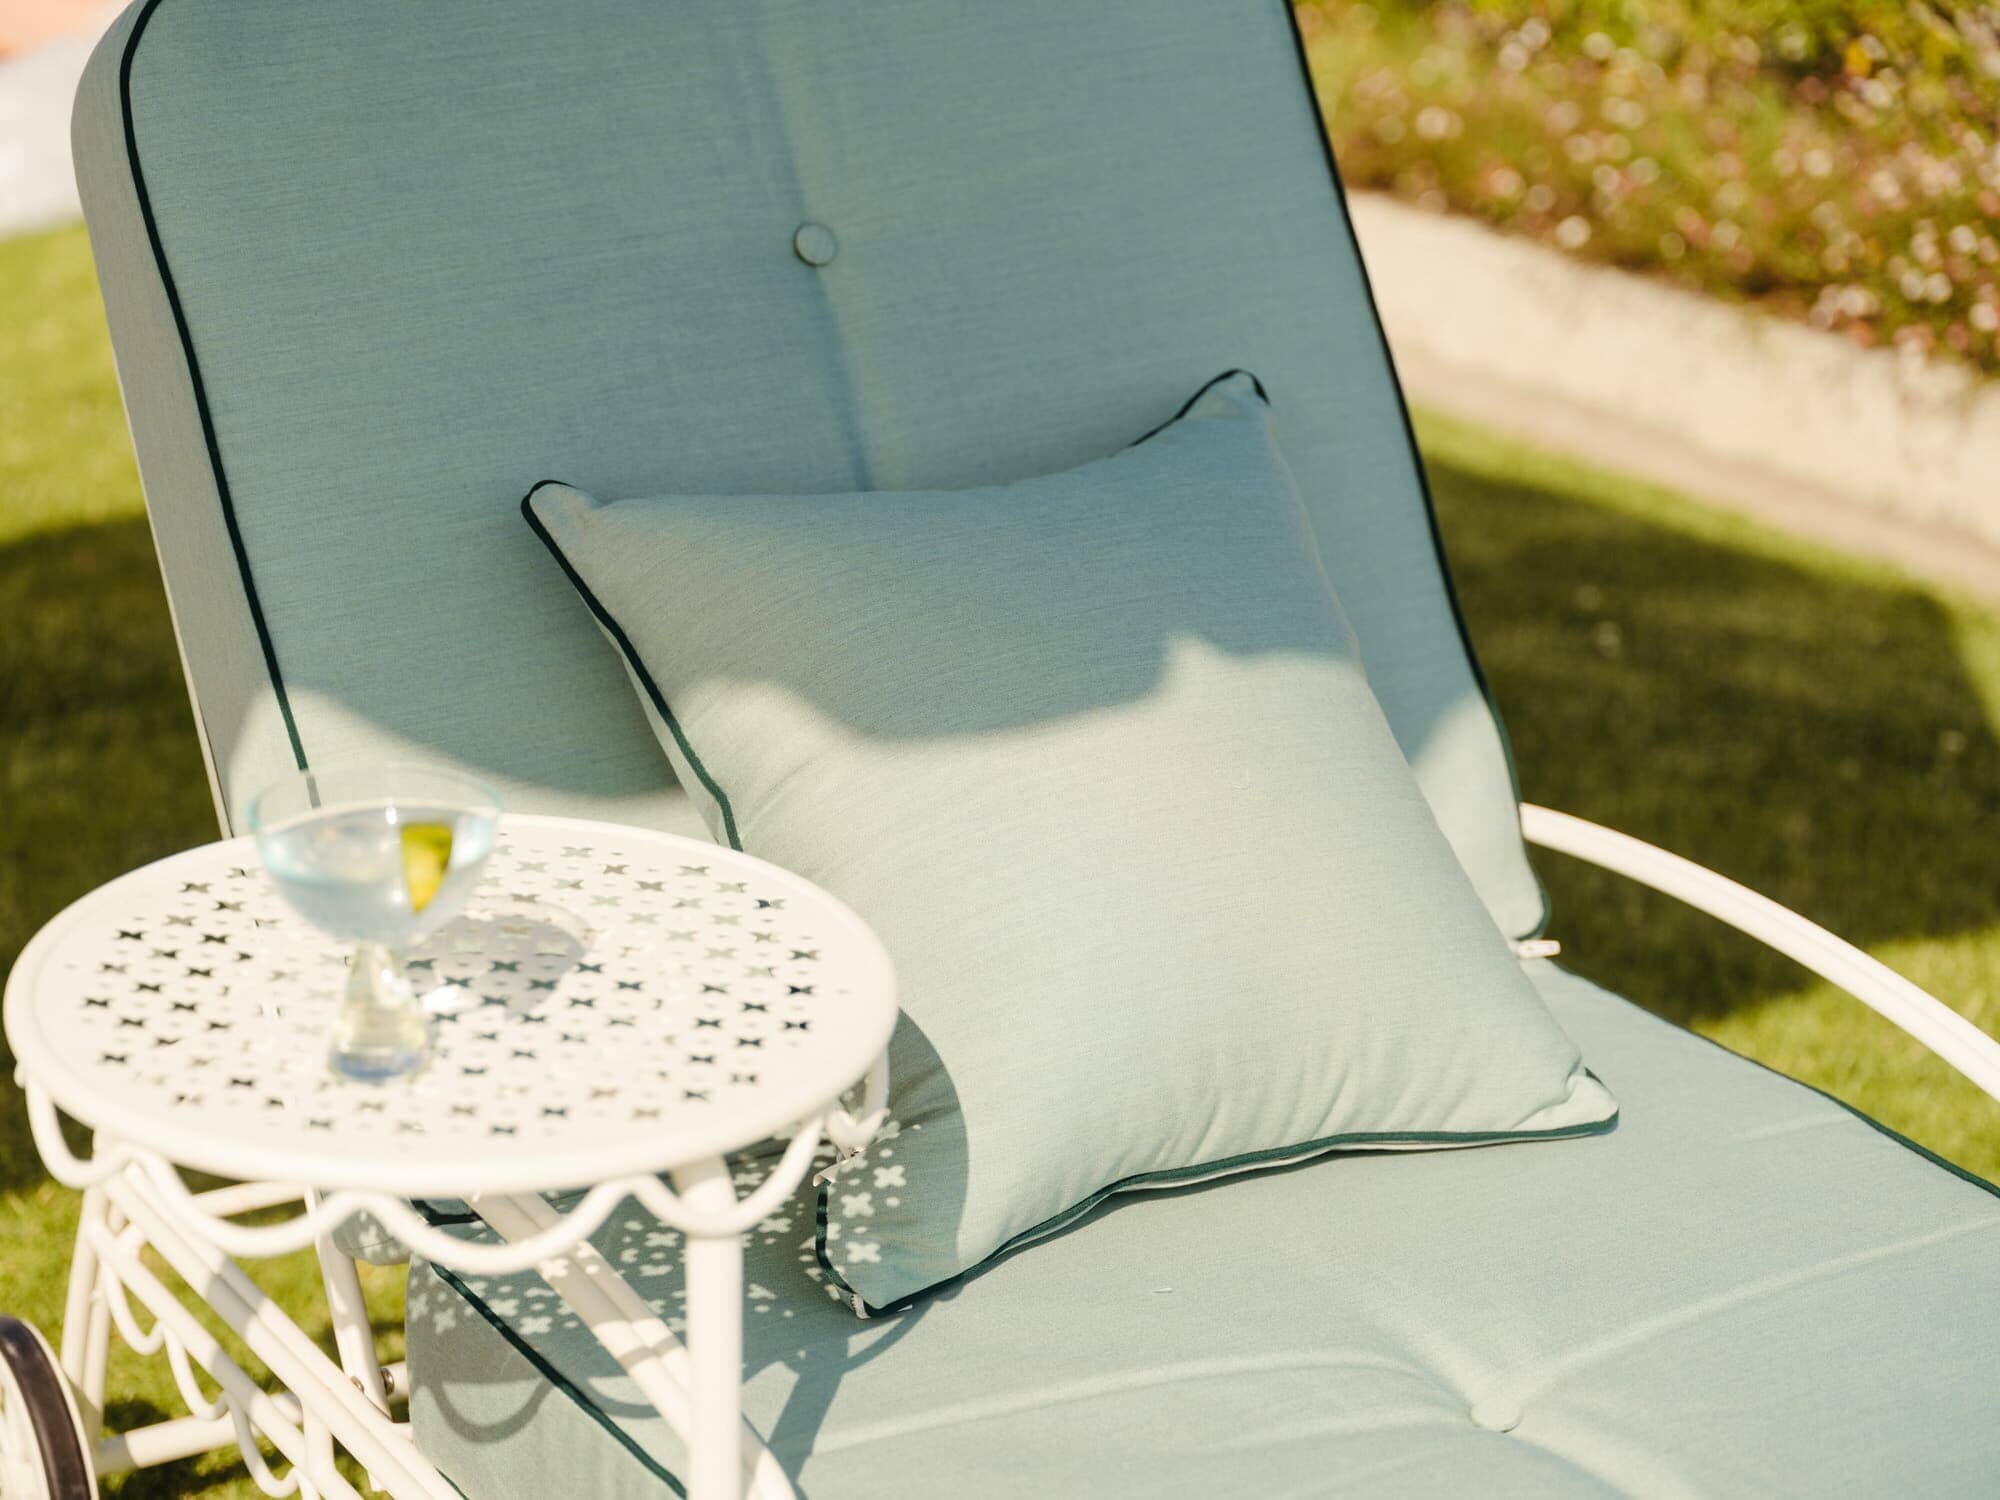 Small throw pillow on sun lounger in garden setting